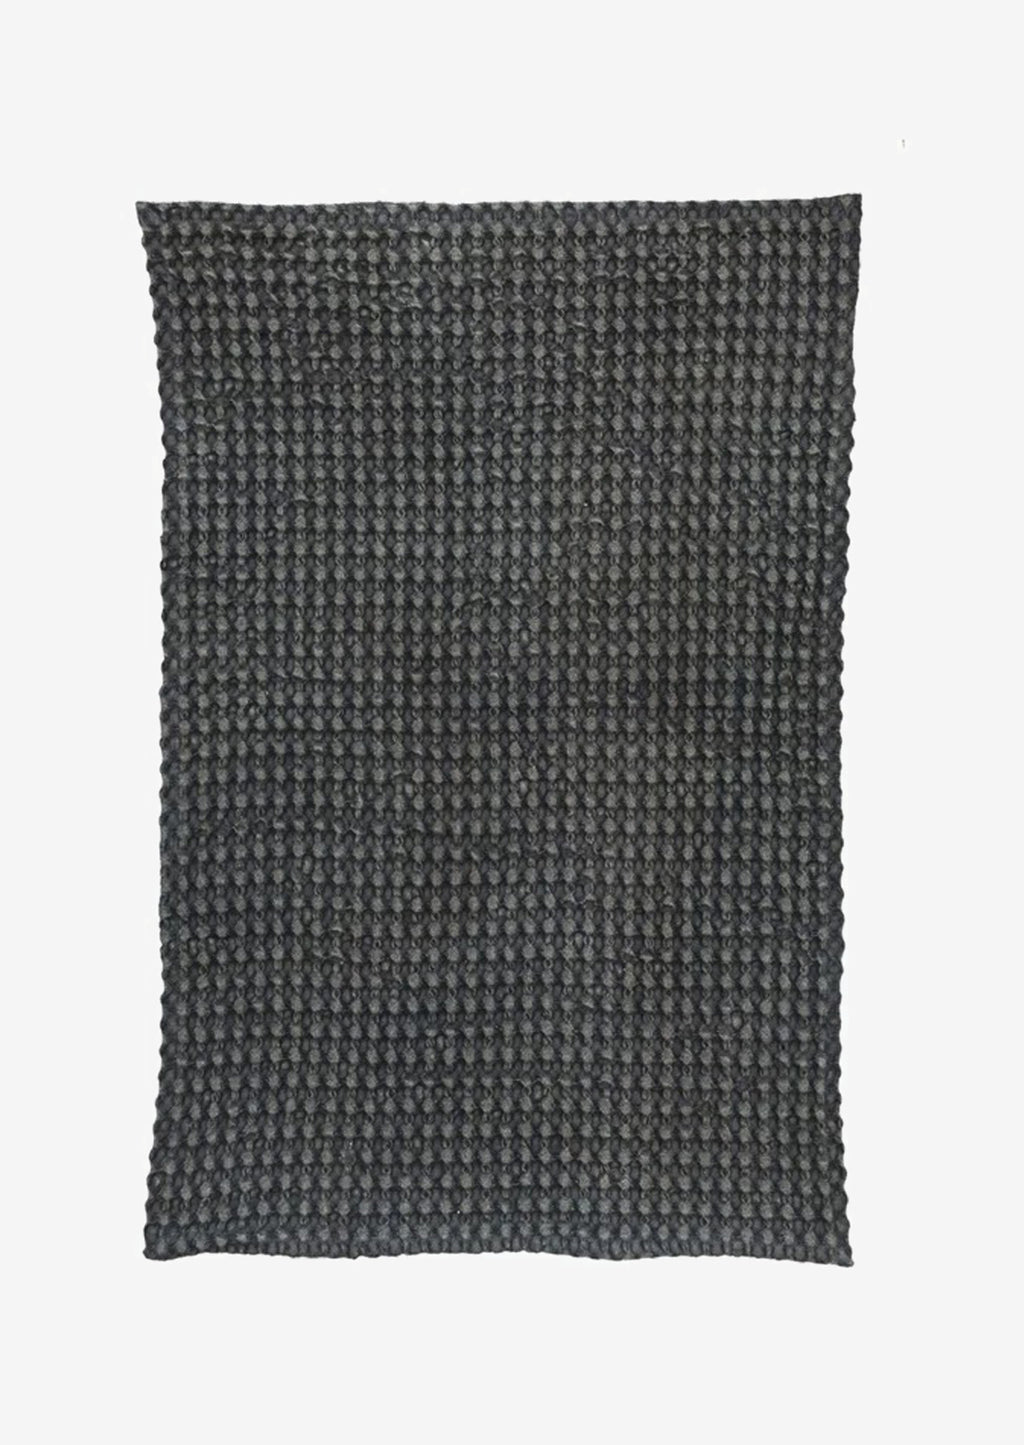 Charcoal: A charcoal waffle weave dish towel.